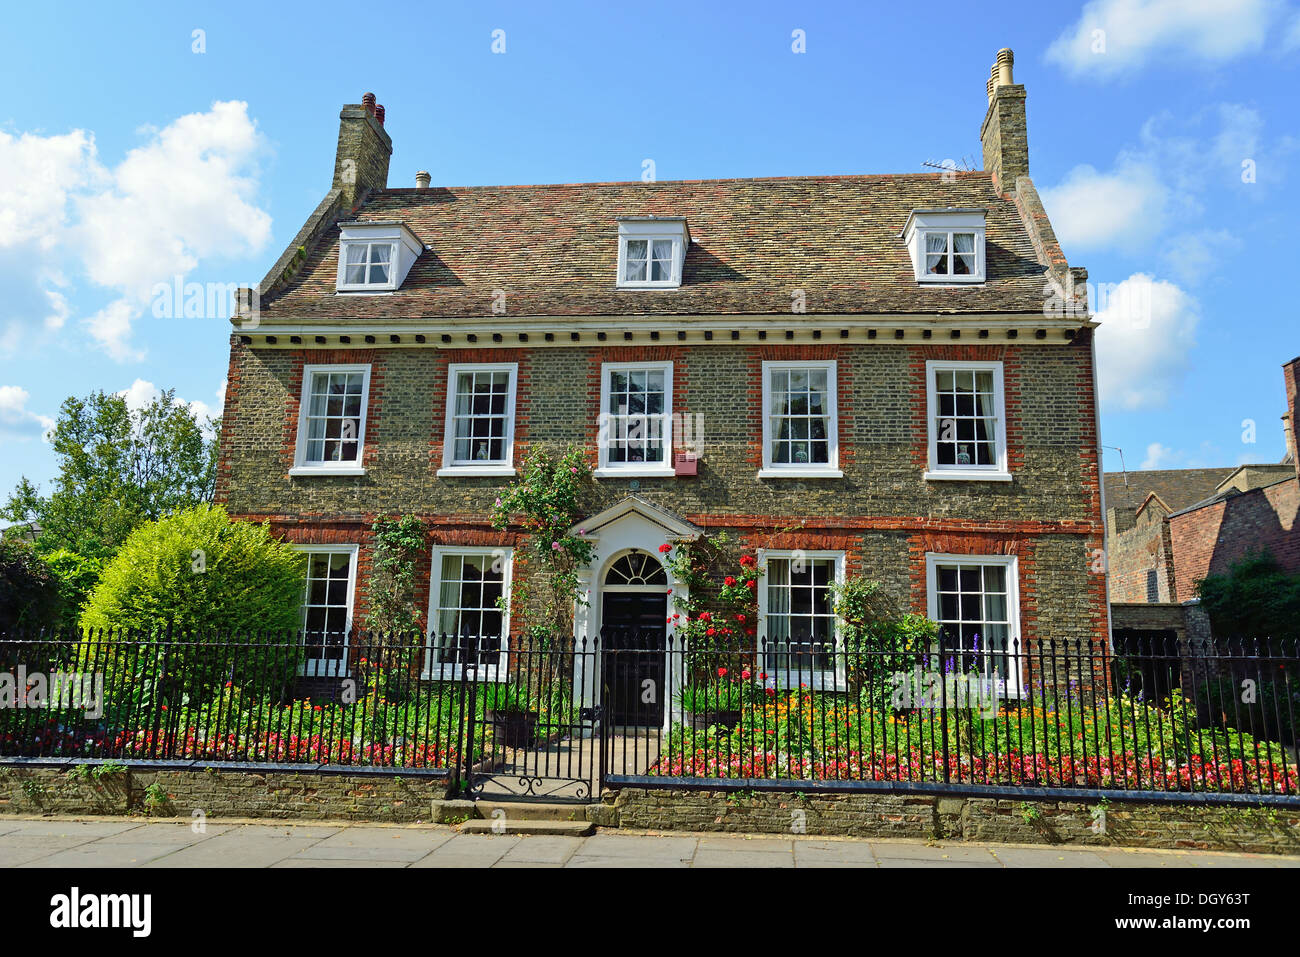 Maison Georgienne sur Palace Green, Ely, Cambridgeshire, Angleterre, Royaume-Uni Banque D'Images